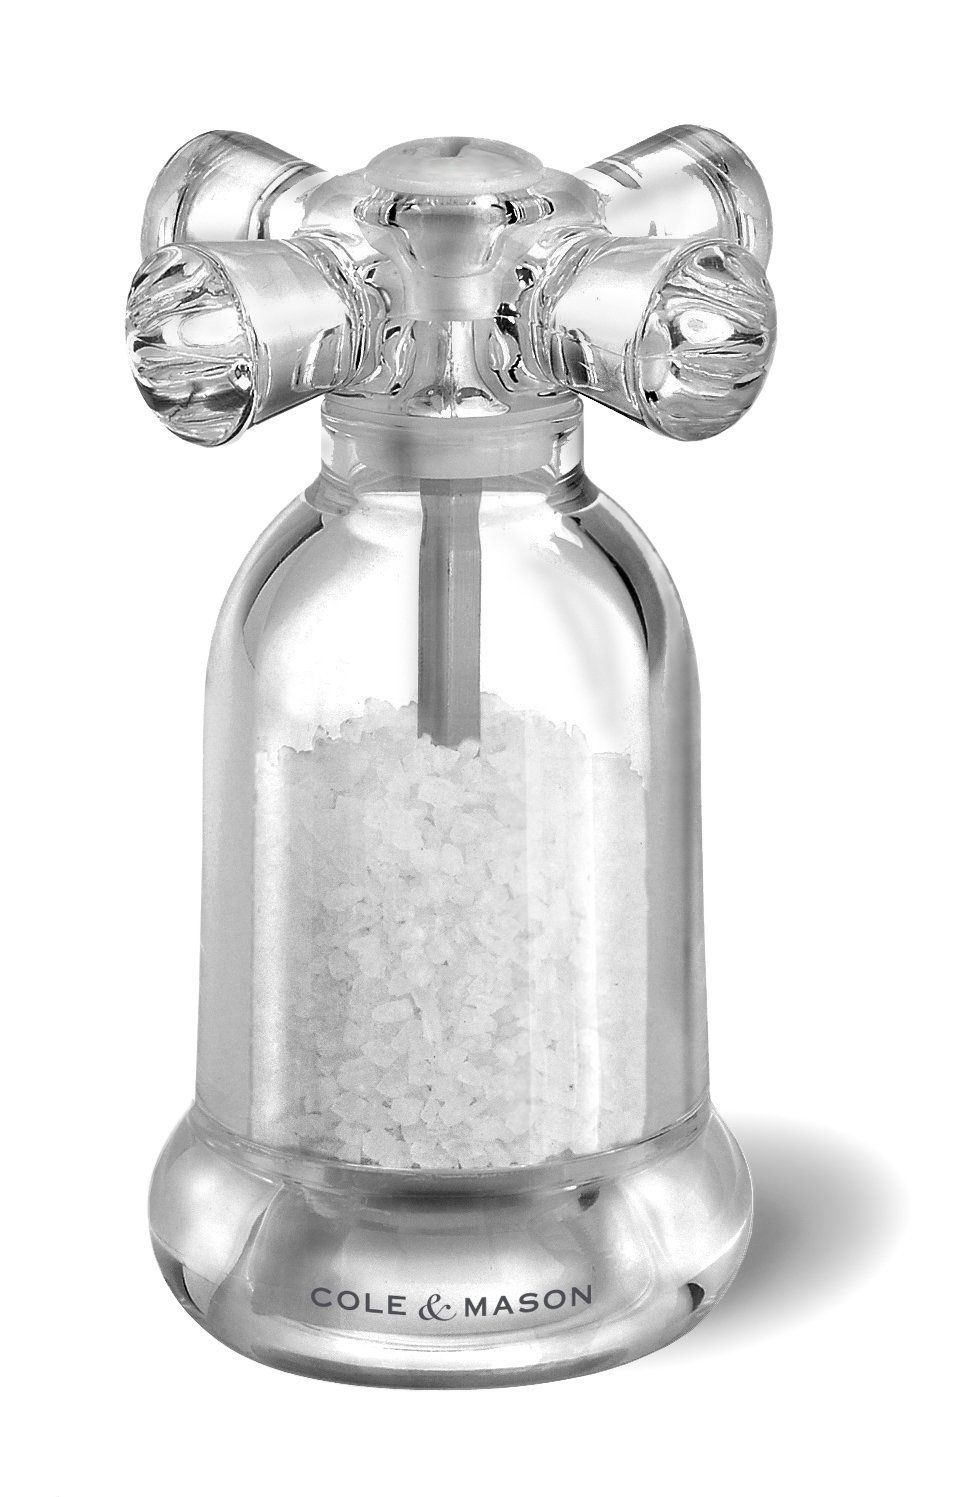 COLE & MASON Tap Salt Grinder - Acrylic Mill Includes Precision Mechansim and Premium Sea Salt | Amazon (US)